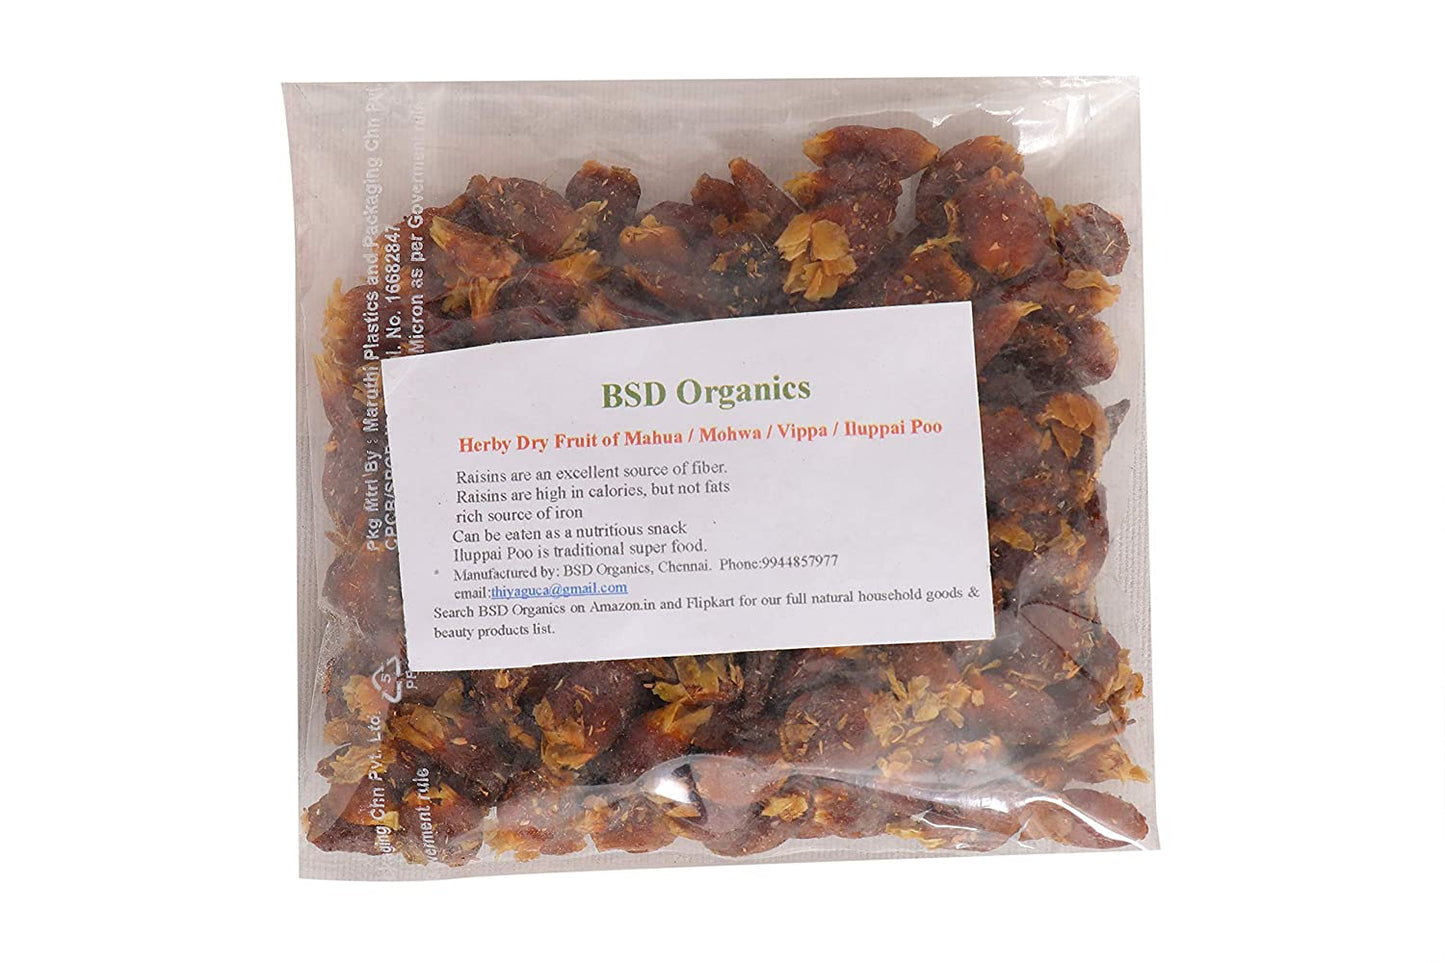 BSD Organics Herby Dry Fruit of Mahua / Mohwa / Vippa / Iluppai Poo- 50 Gram